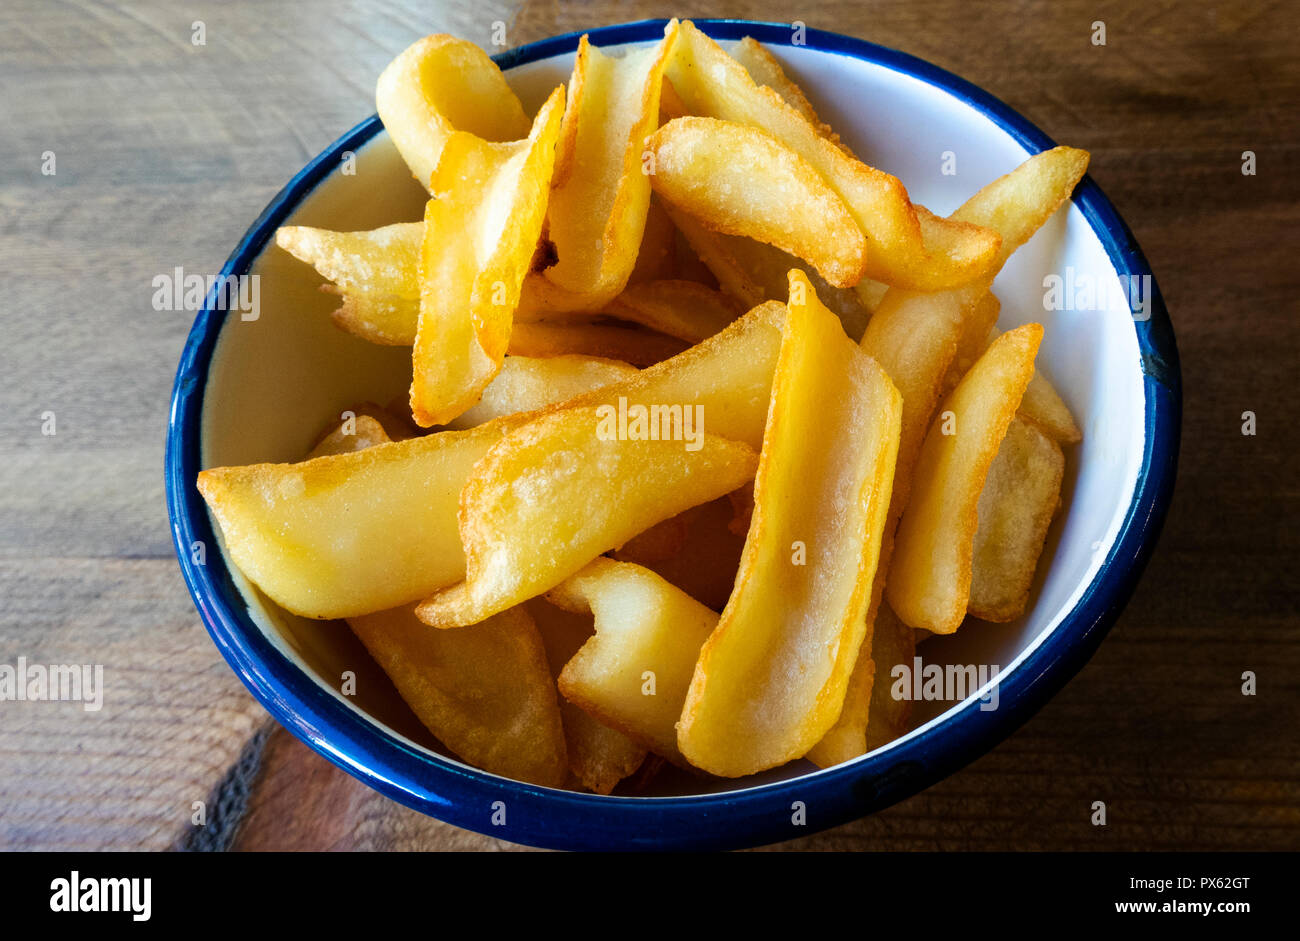 Spanish Chips Immagini E Fotos Stock Alamy